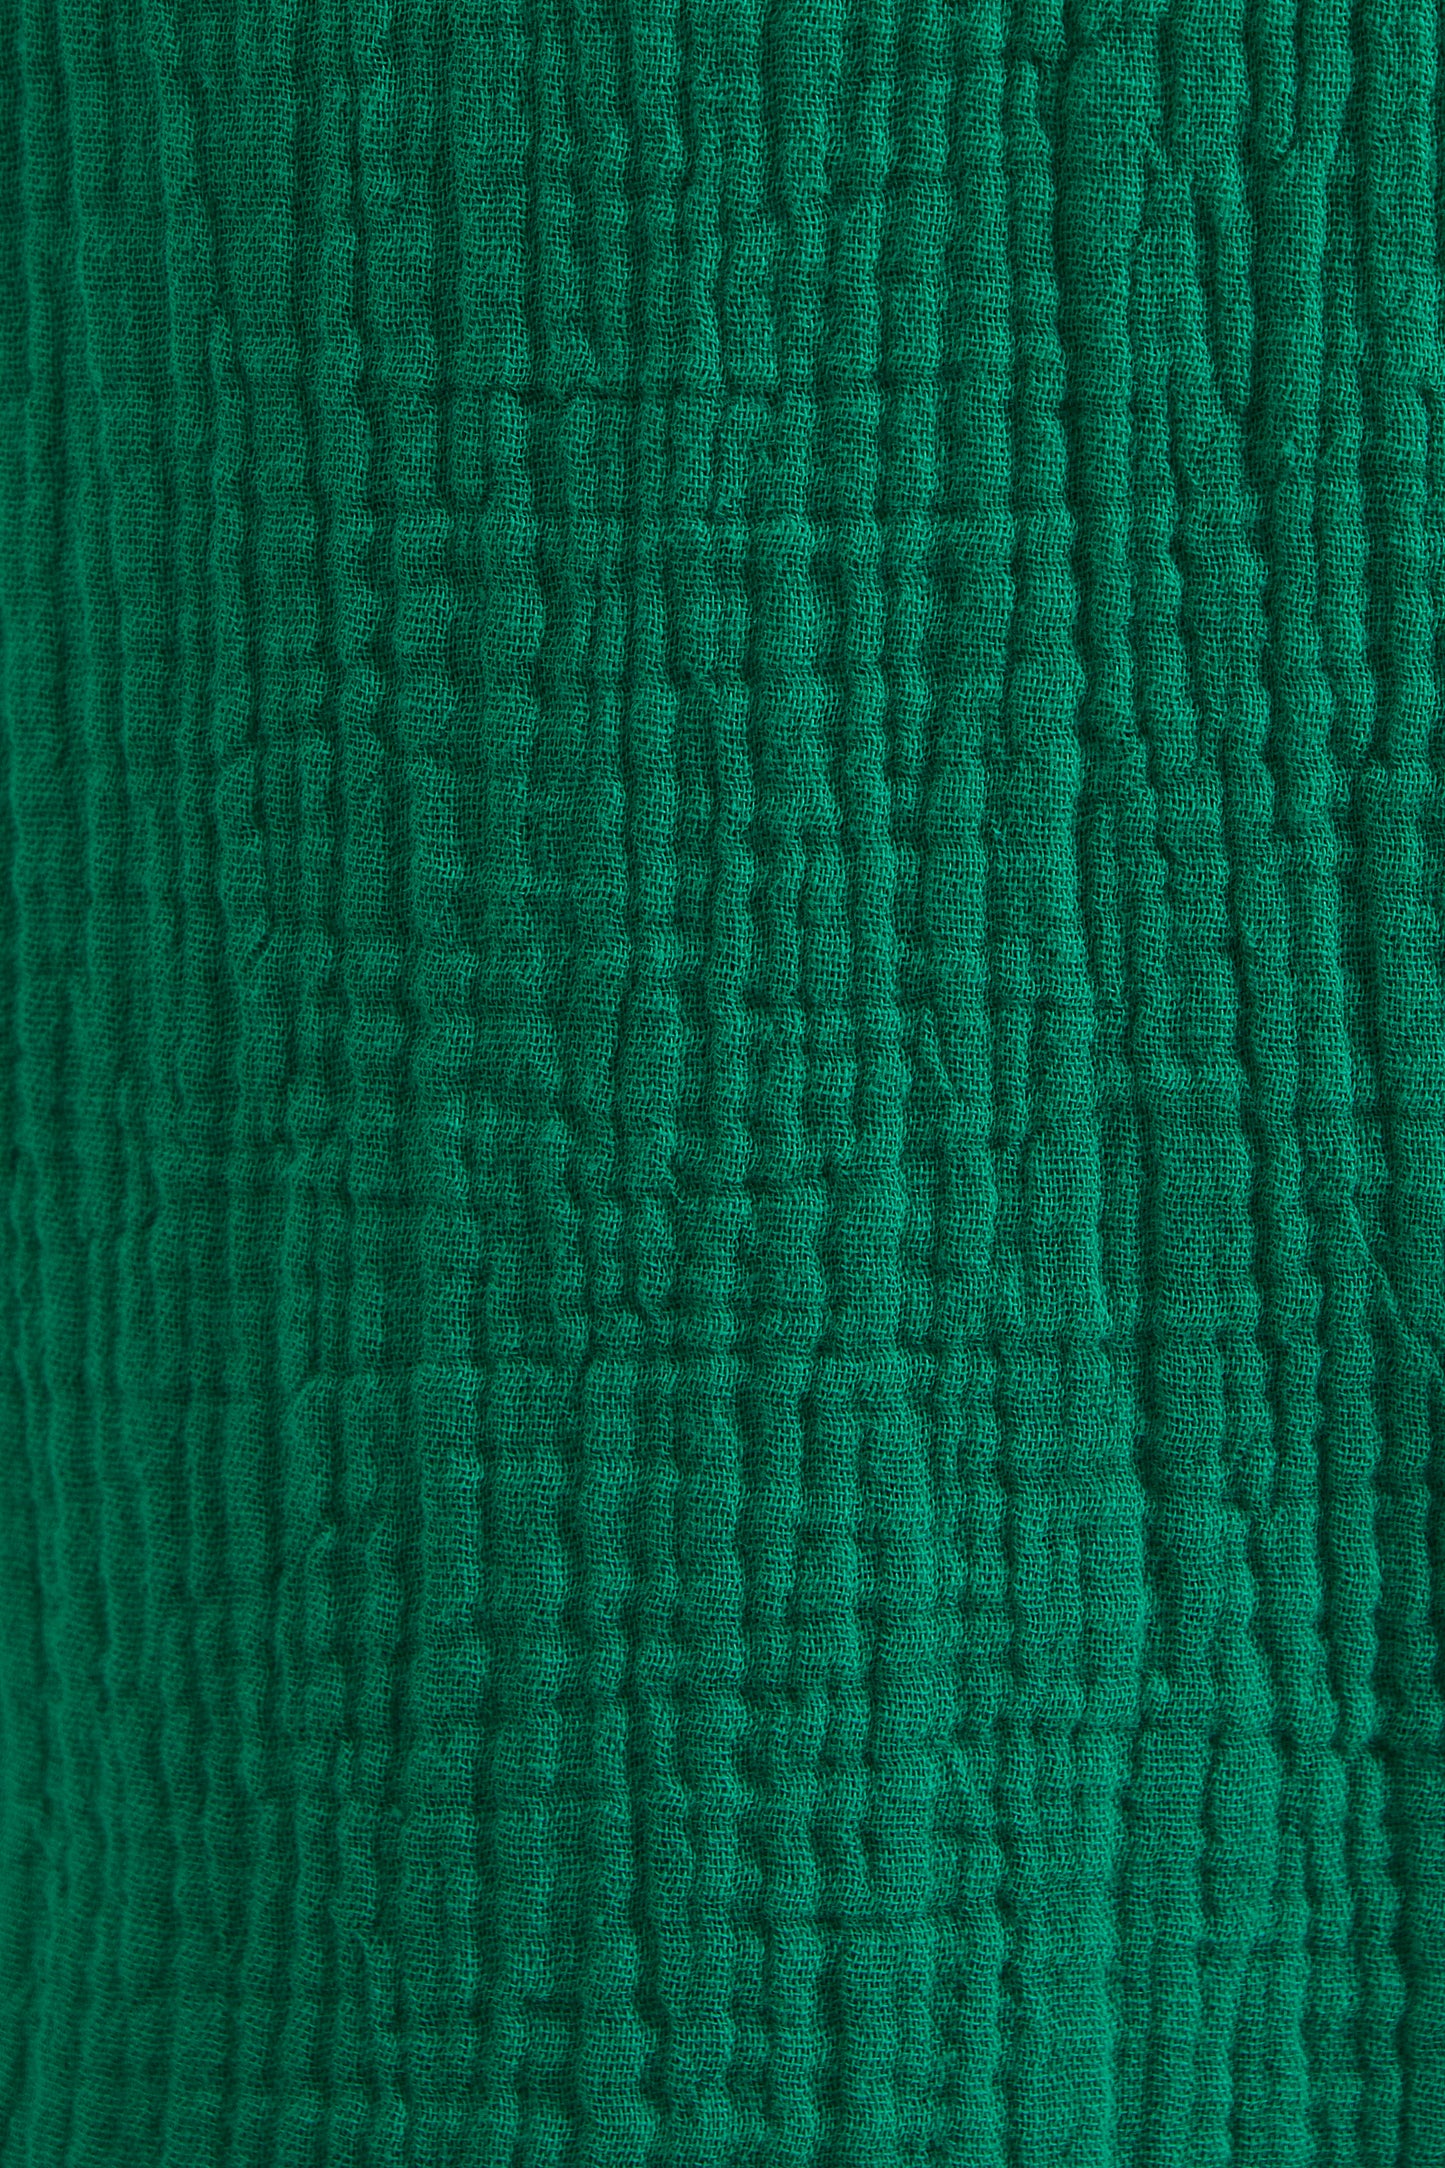 Abinaya Green Double Gauze Short Sleeved Shirt